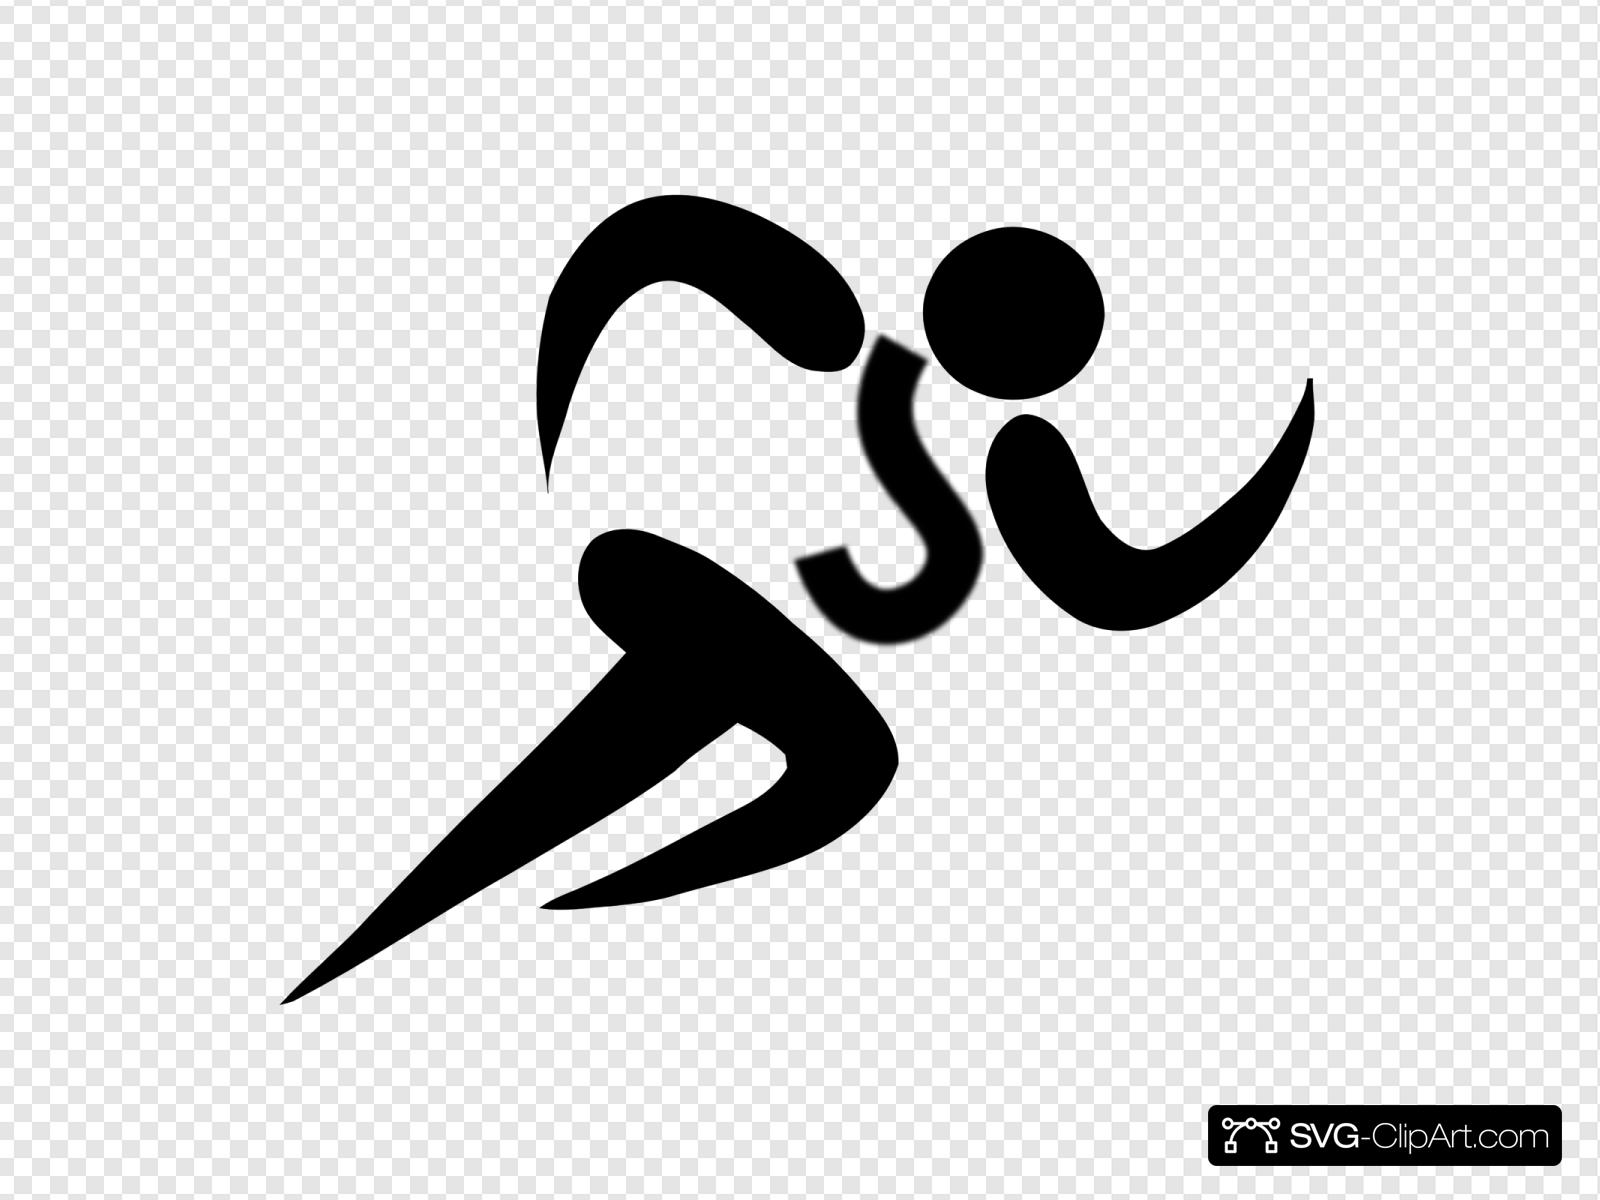 Jj Logo Clip art, Icon and SVG.